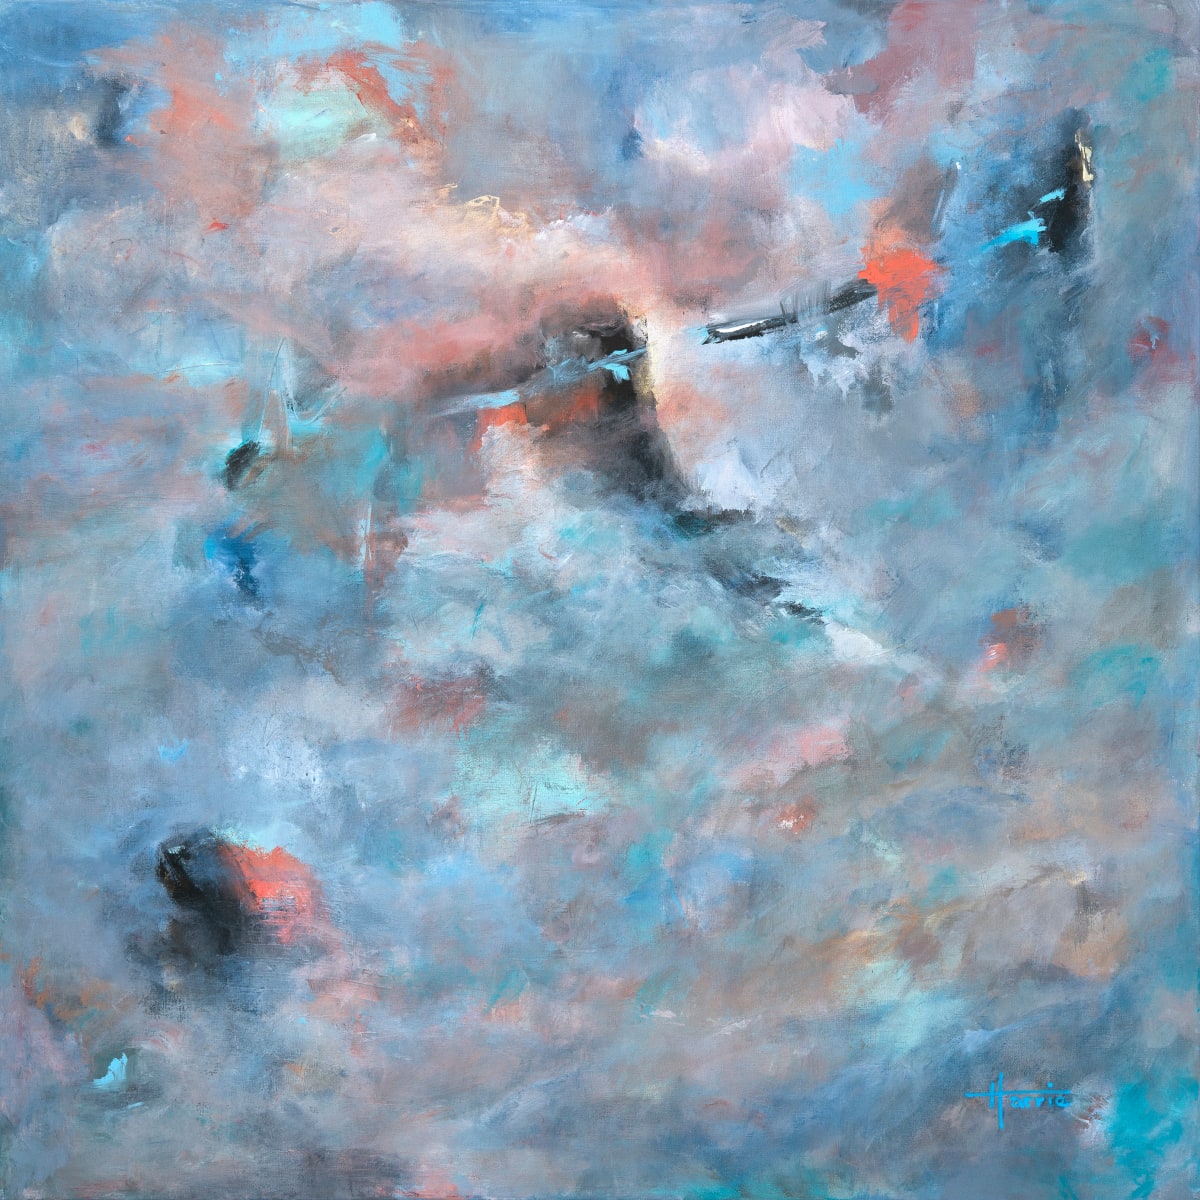 Clouds of Smoke by Harrie Handler 